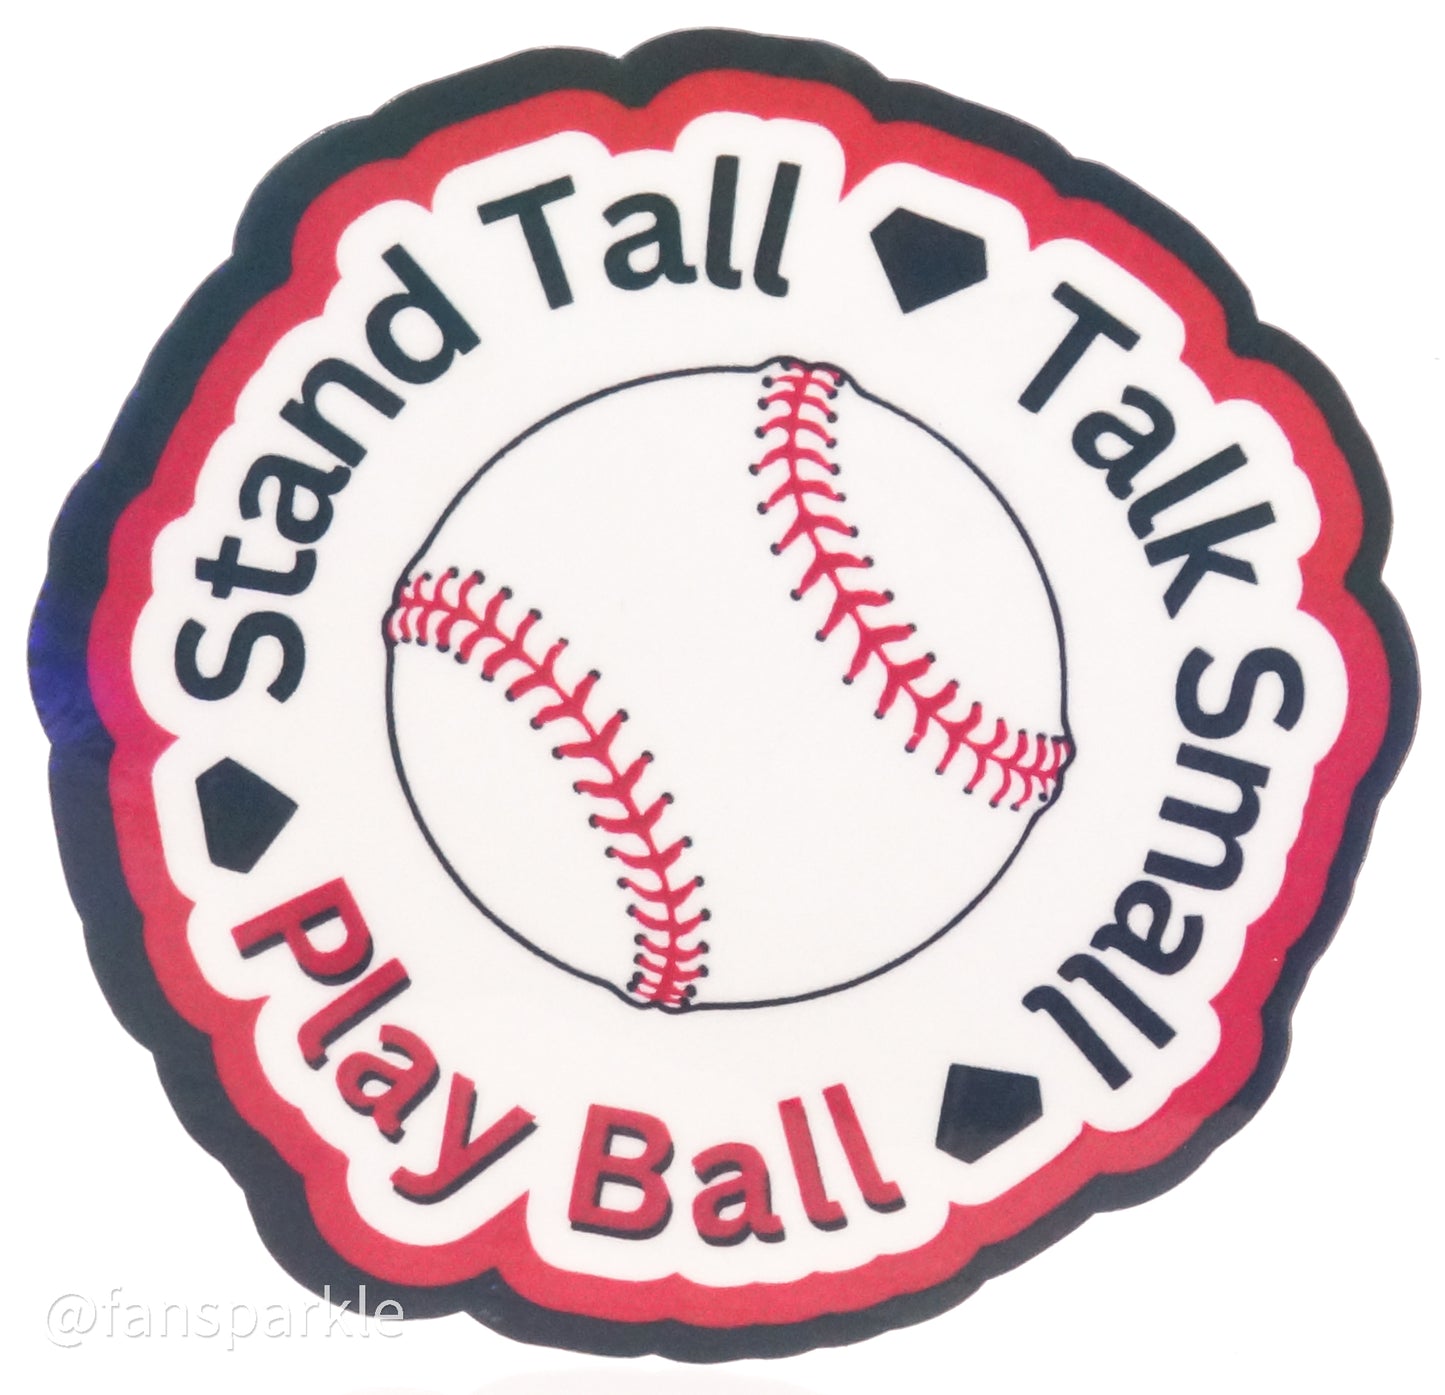 Stand Tall Talk Small Play Ball Sticker - Fan Sparkle